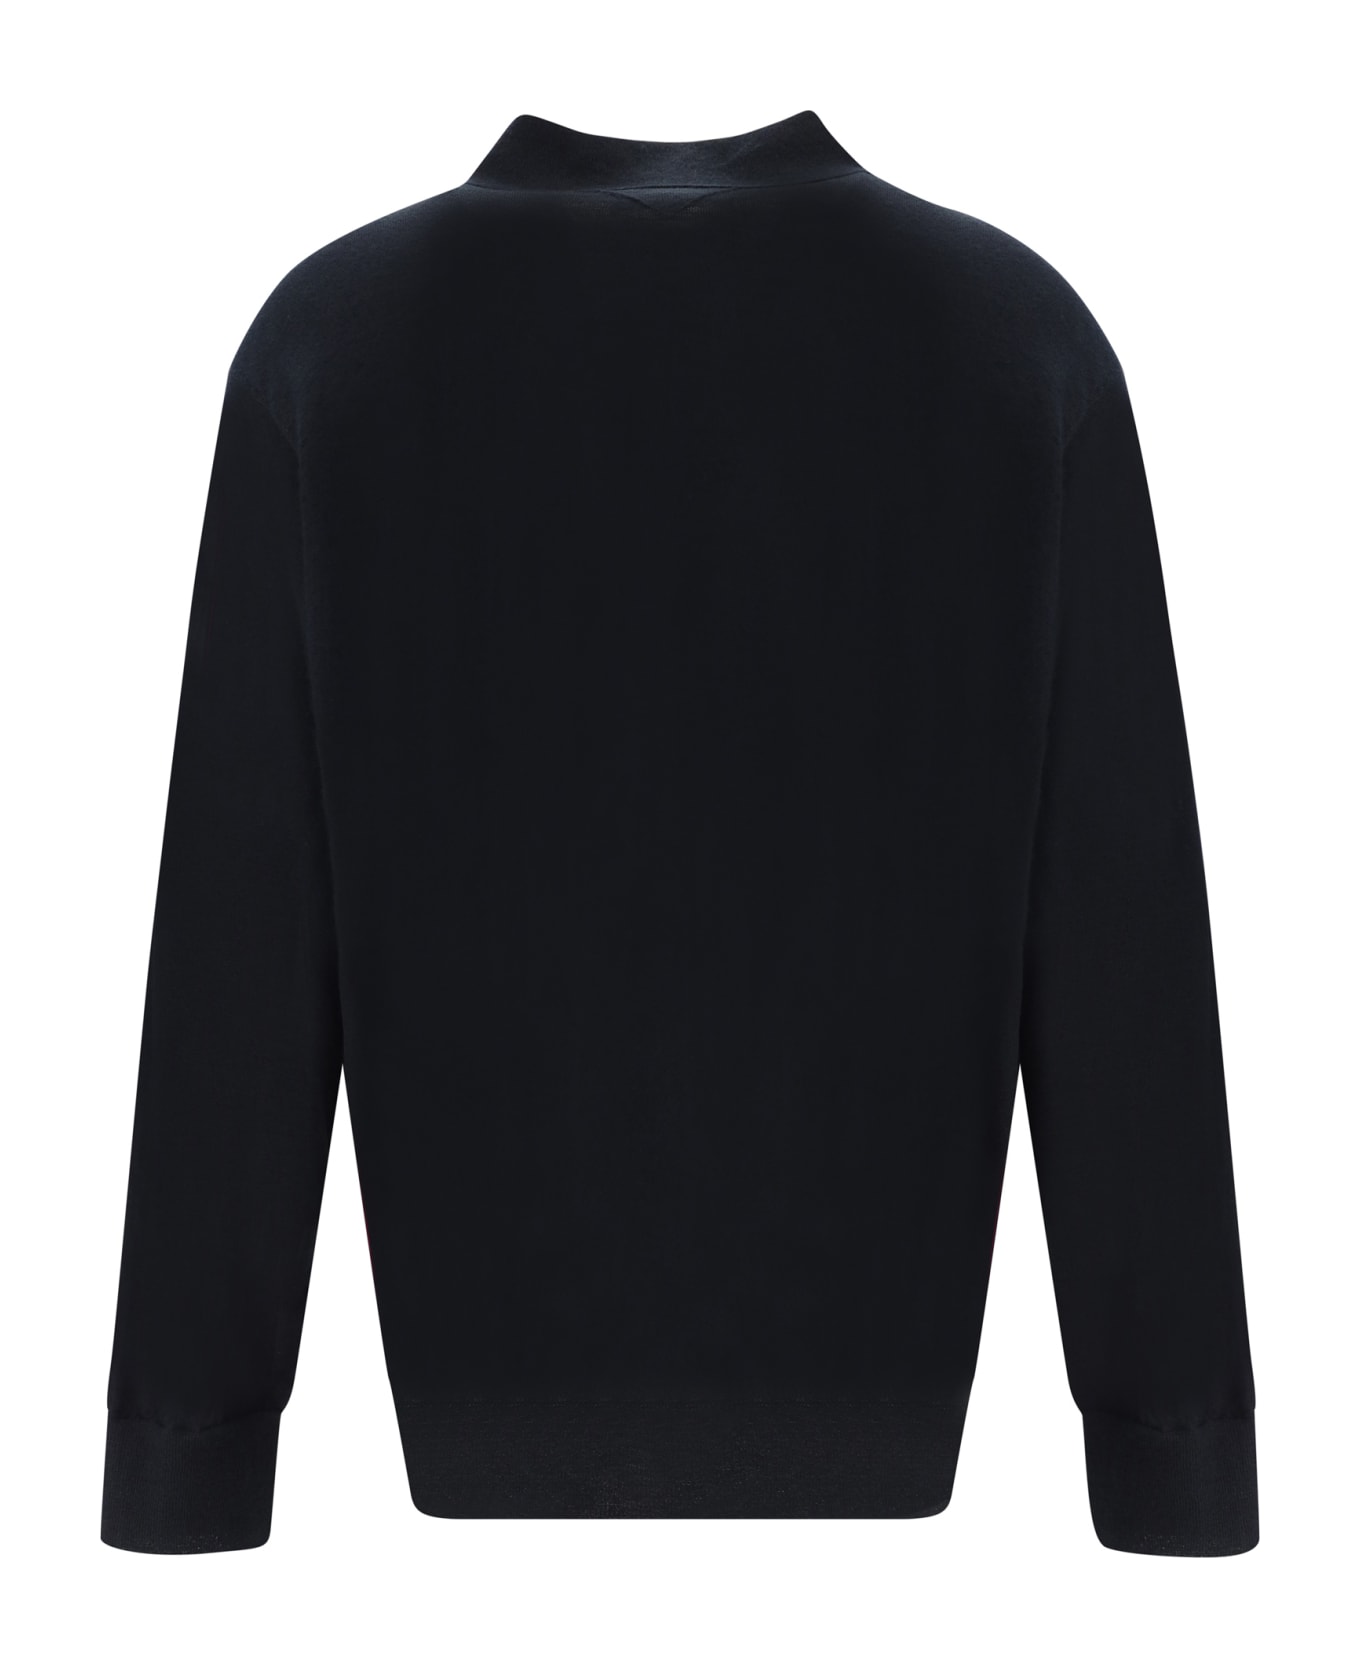 Prada Polo Shirt - Black